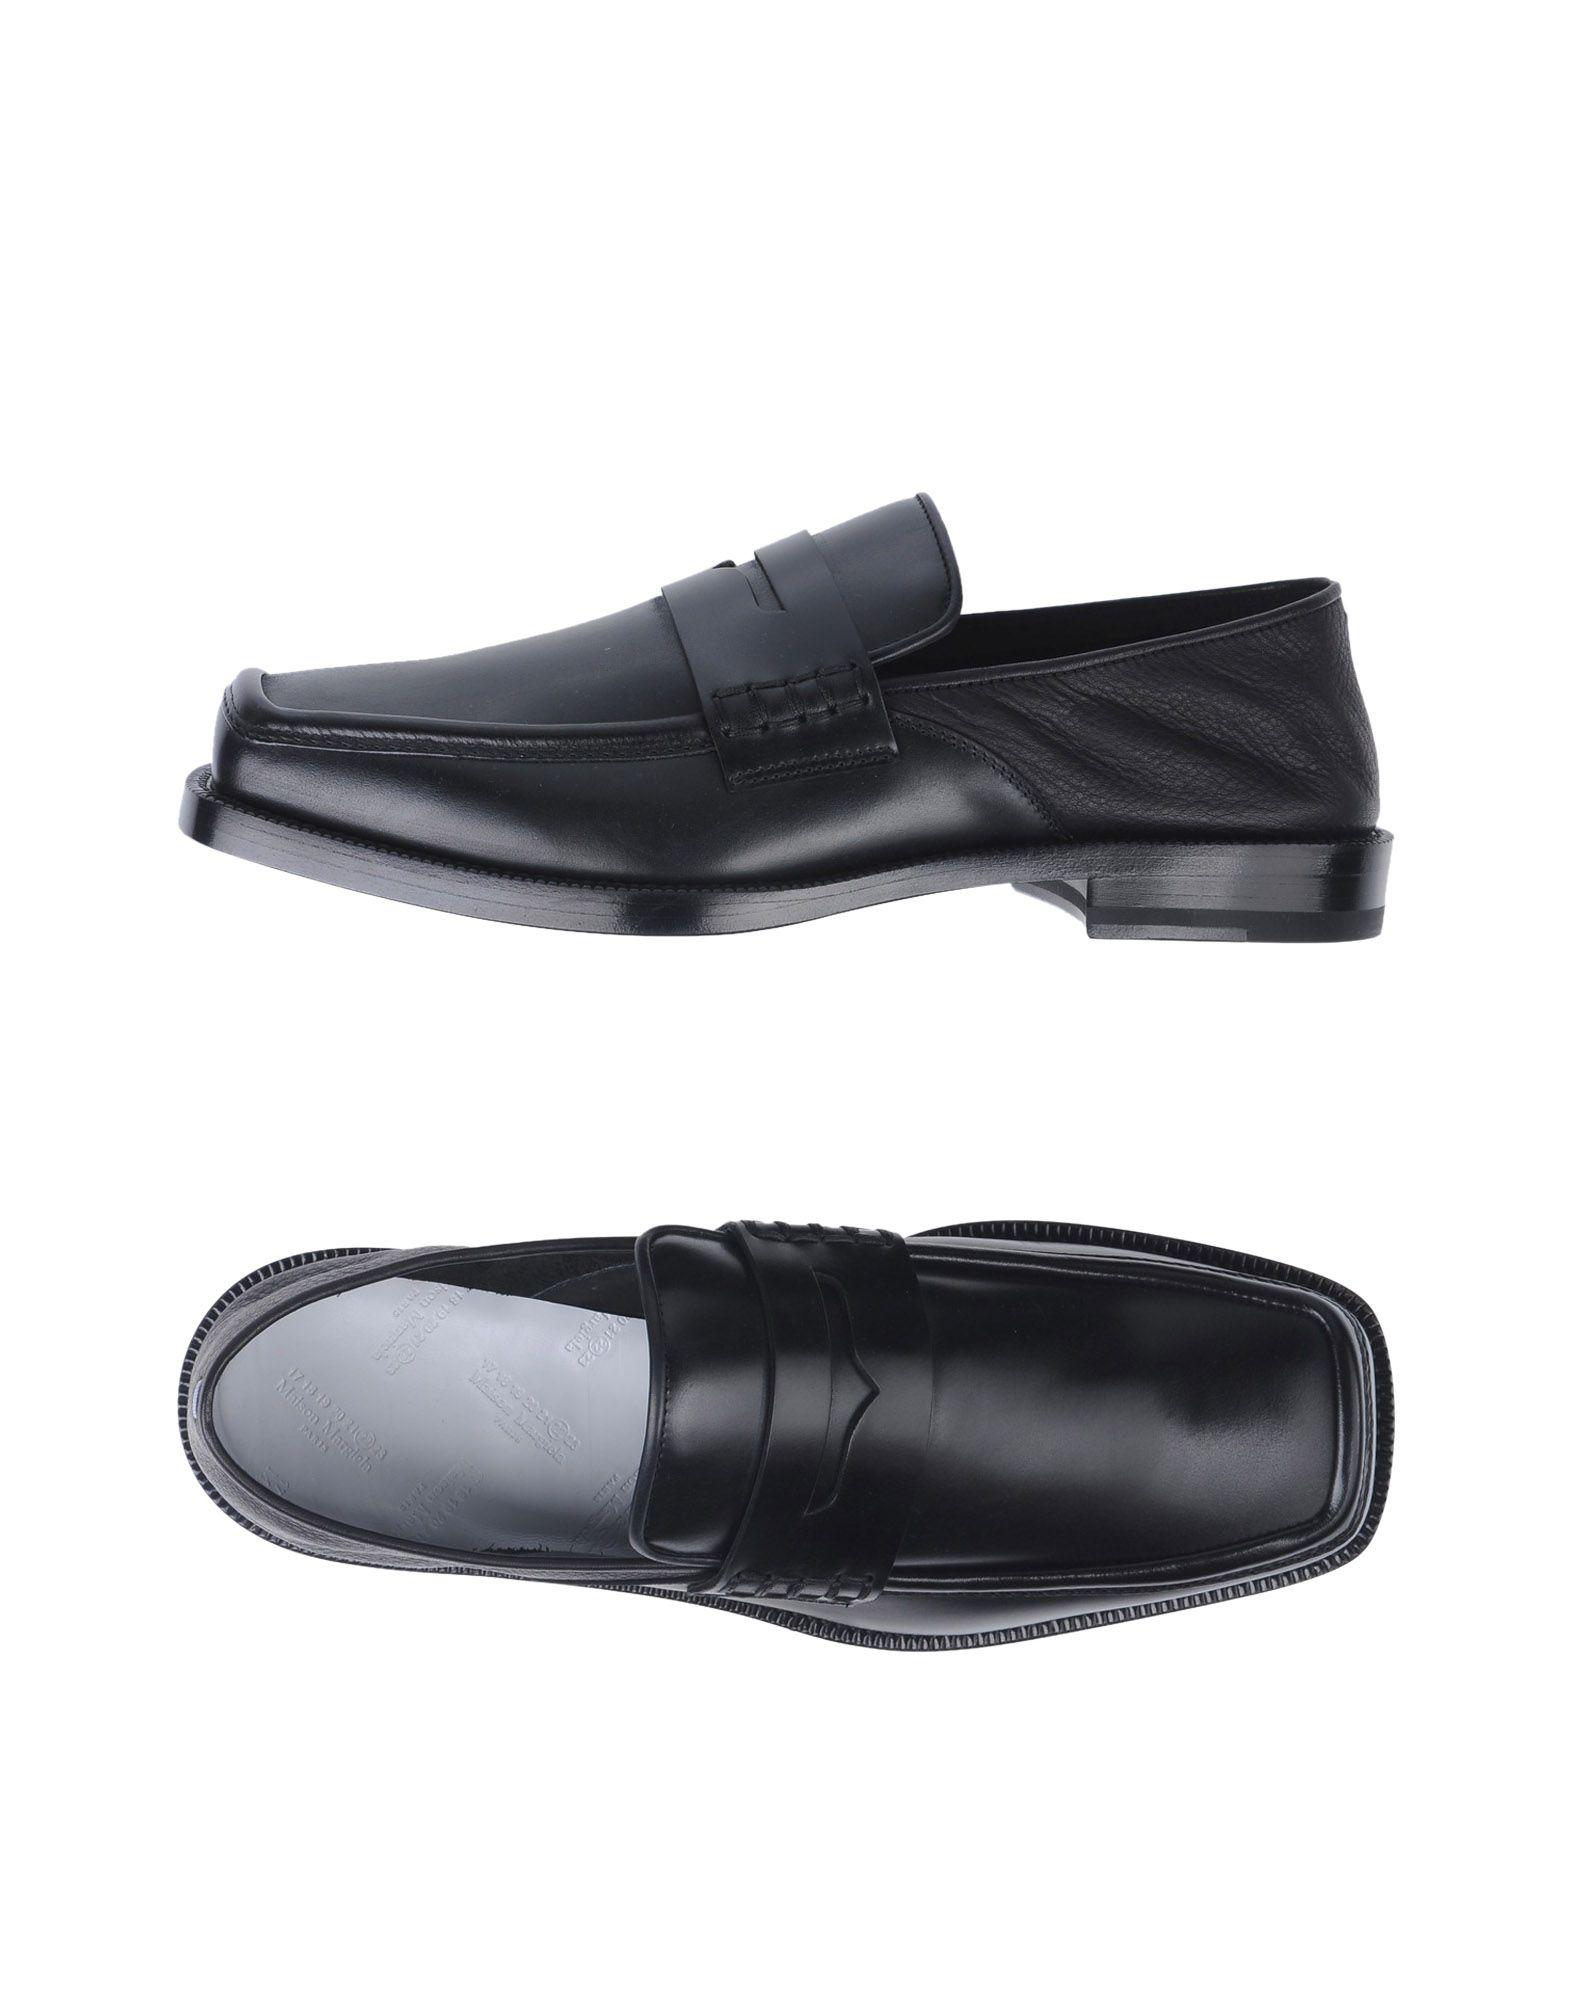 Maison Margiela Leather Loafer in Black for Men - Lyst